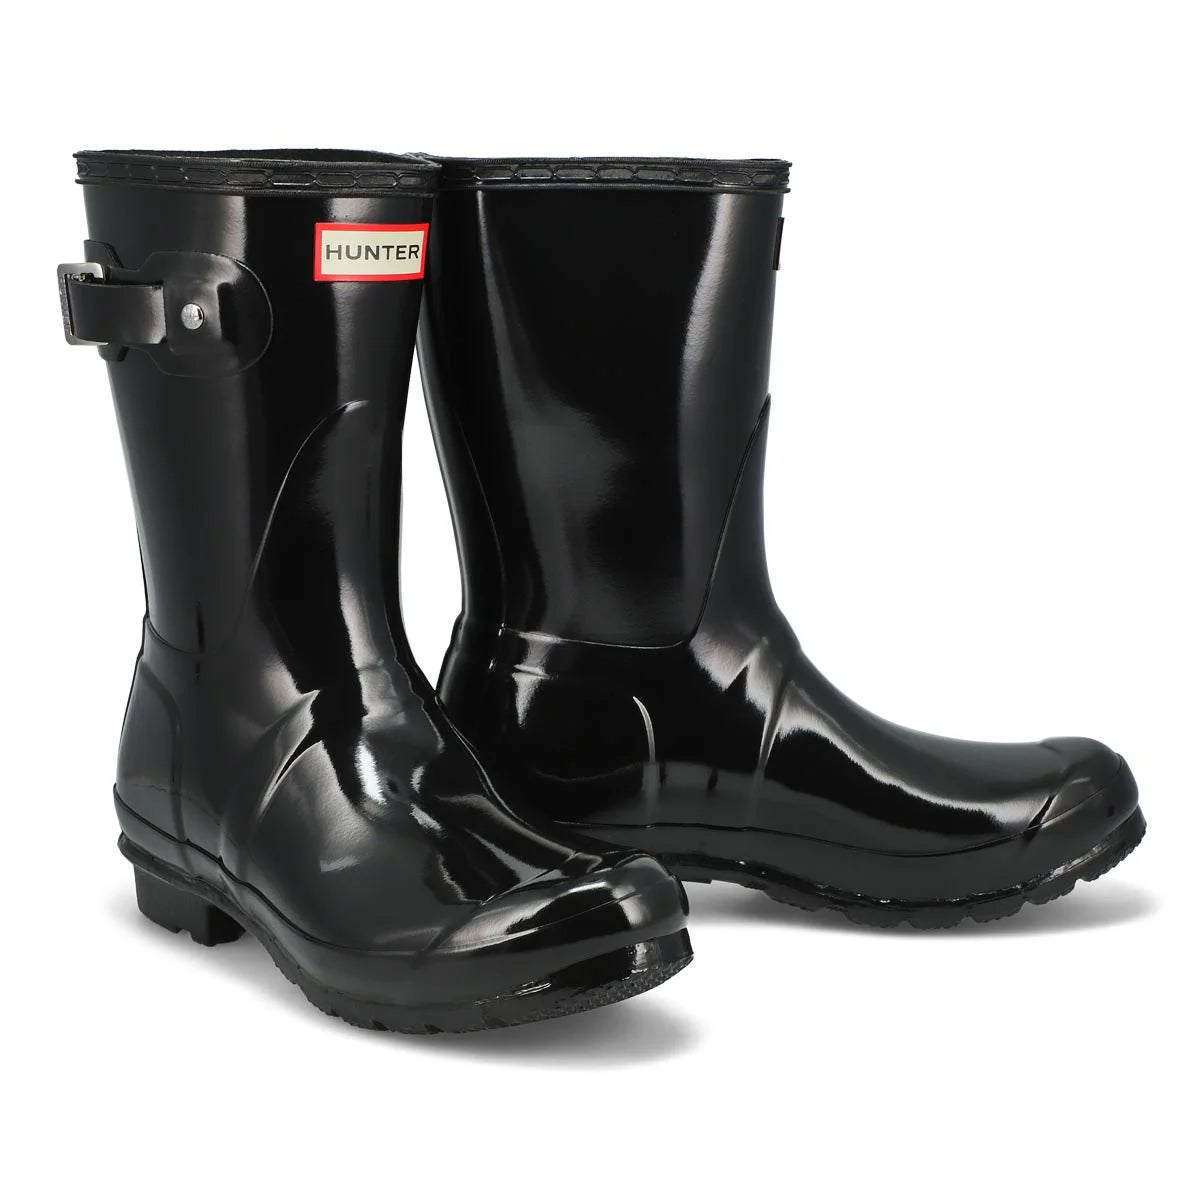 HUNTER Women's Original Short Gloss Rain Boots - Black (US 11)